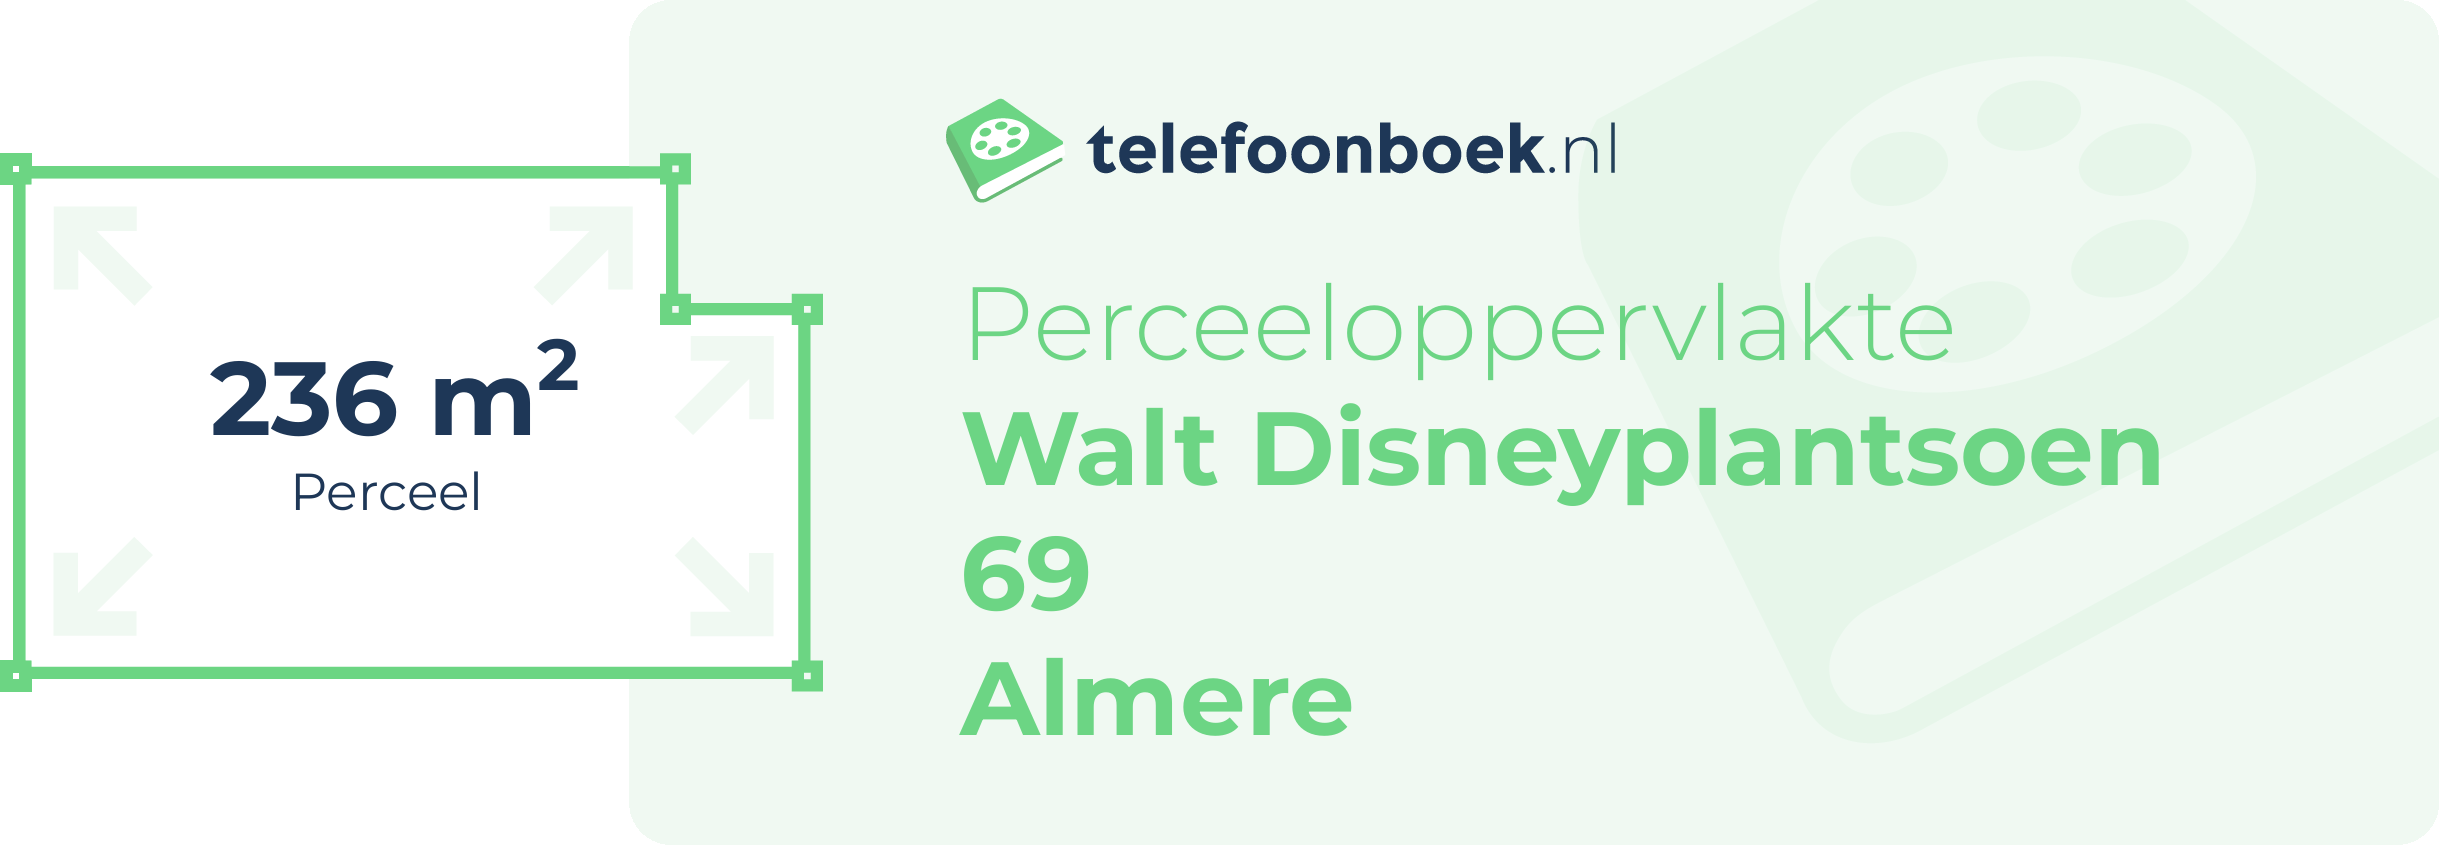 Perceeloppervlakte Walt Disneyplantsoen 69 Almere